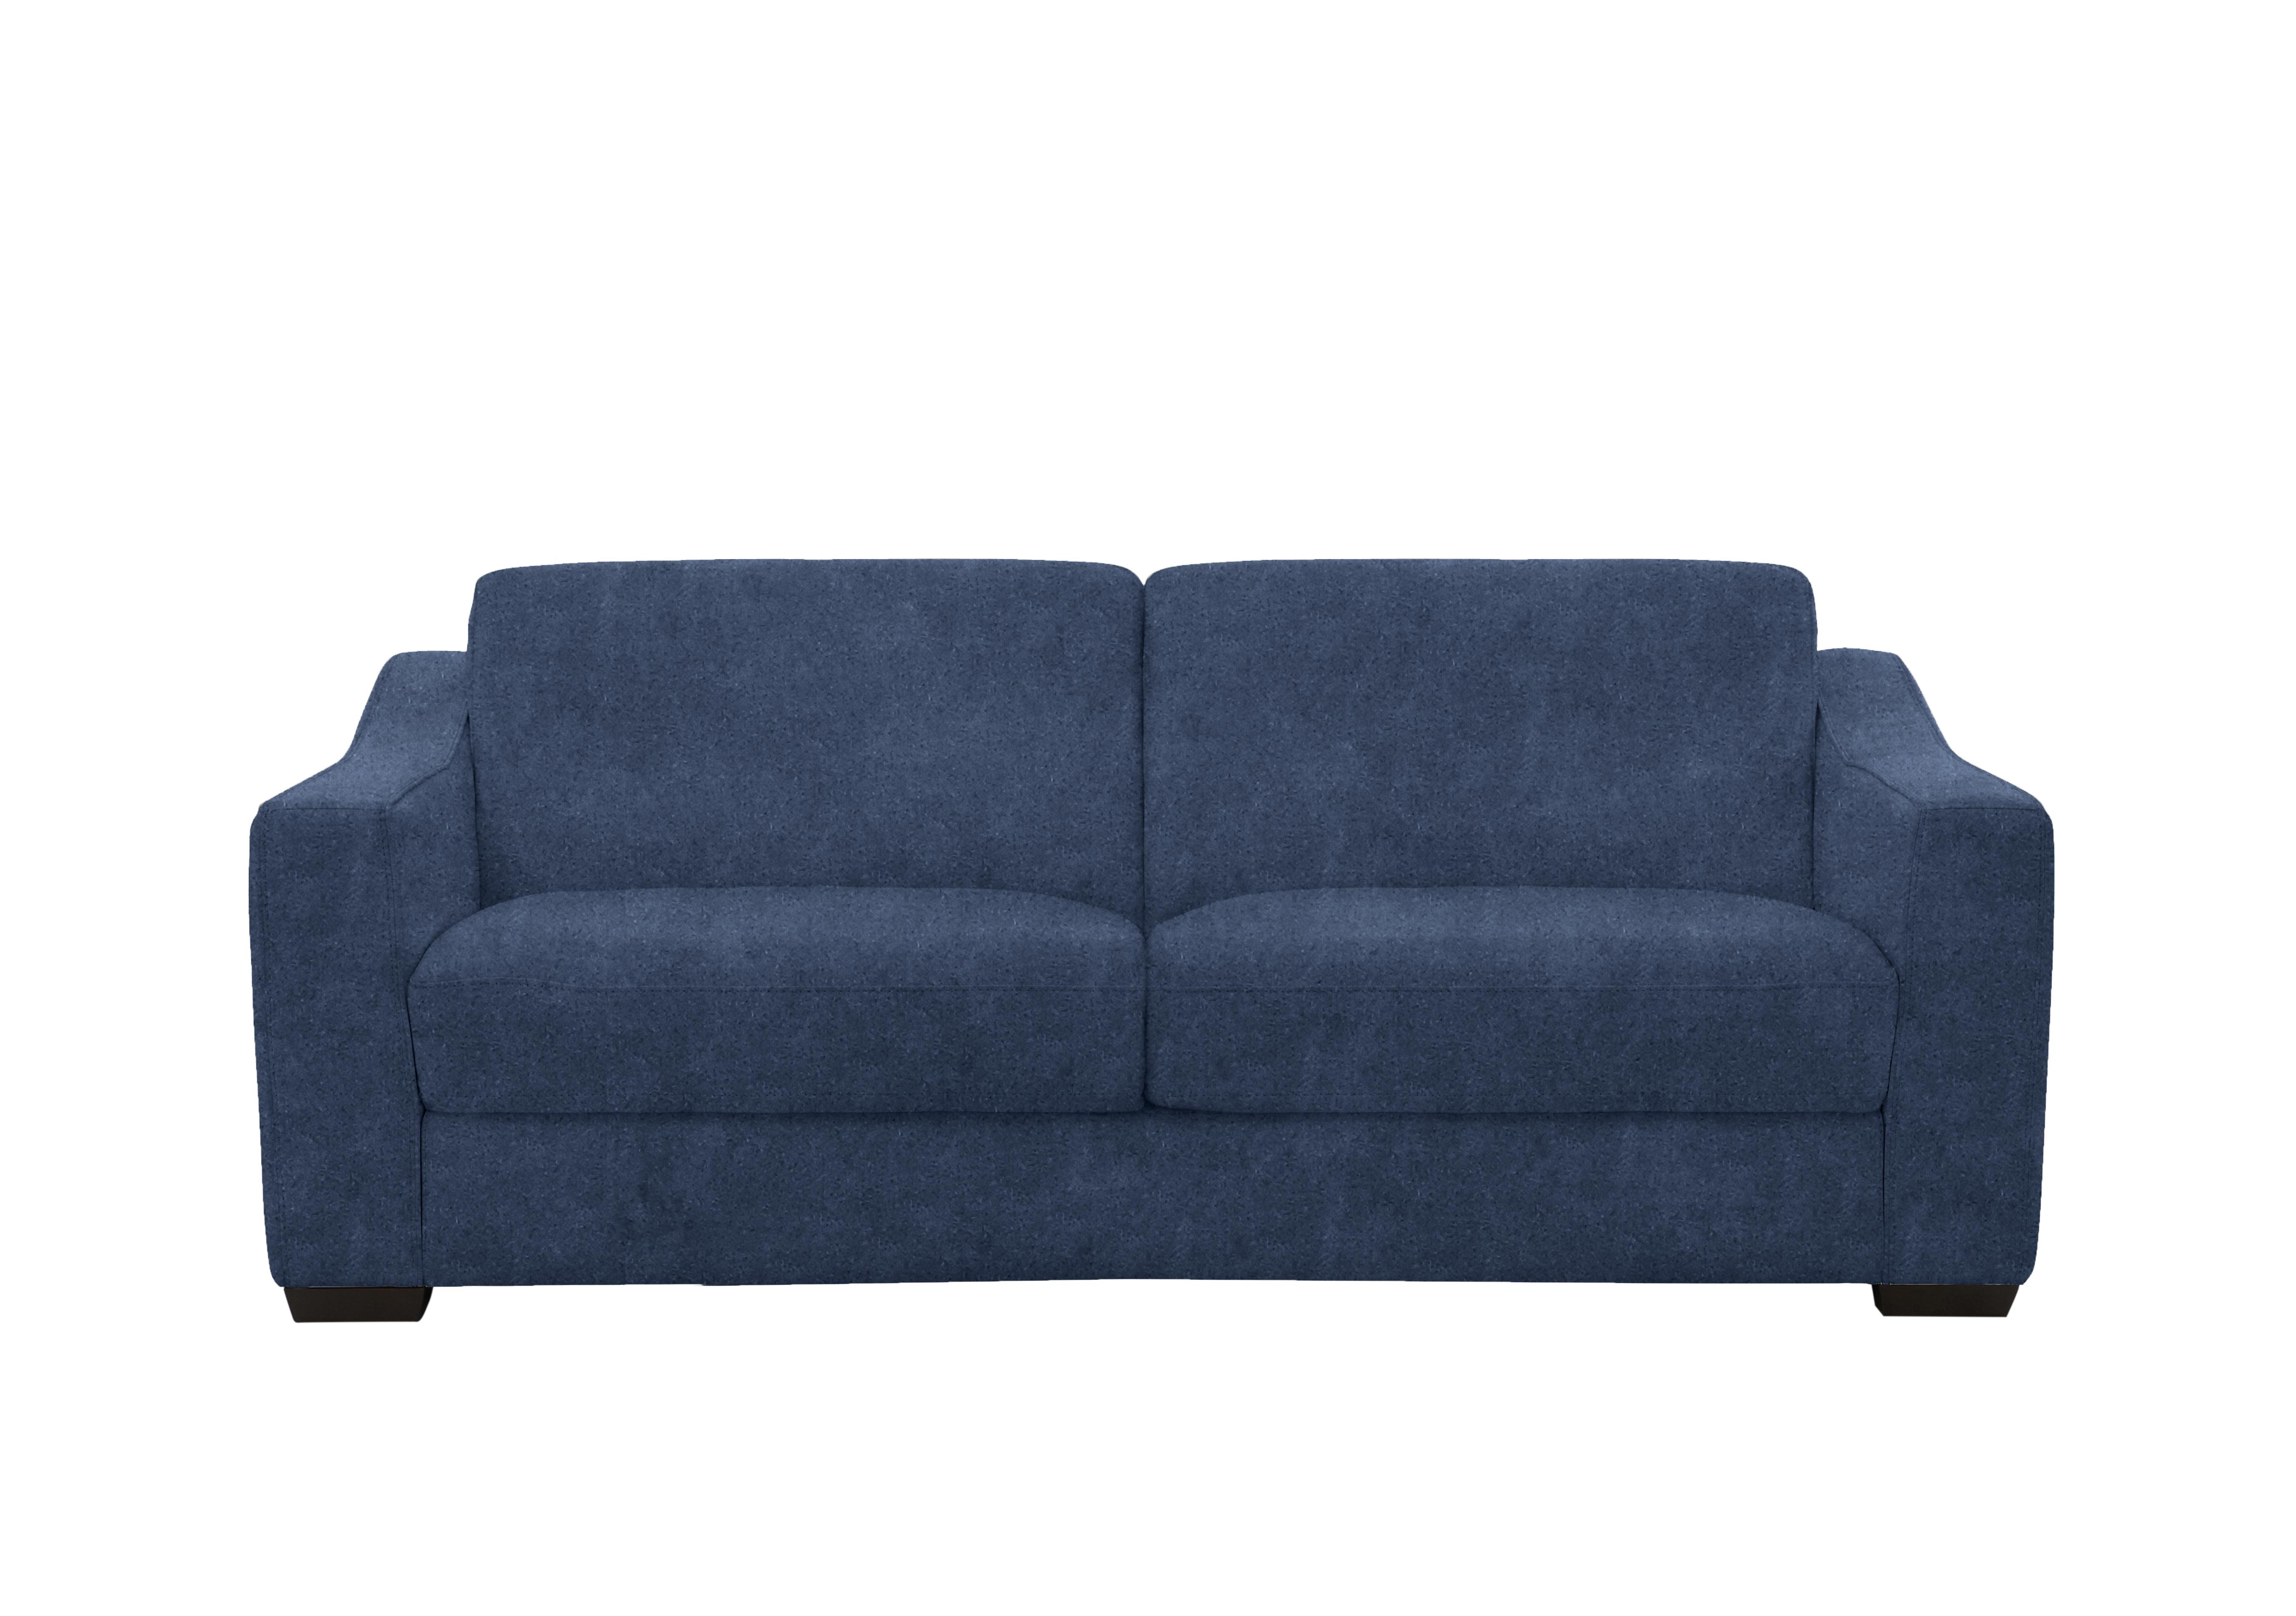 Optimus Space Saving Fabric Sofa Bed with Memory Foam Mattress in Bfa-Blj-R10 Blue on Furniture Village